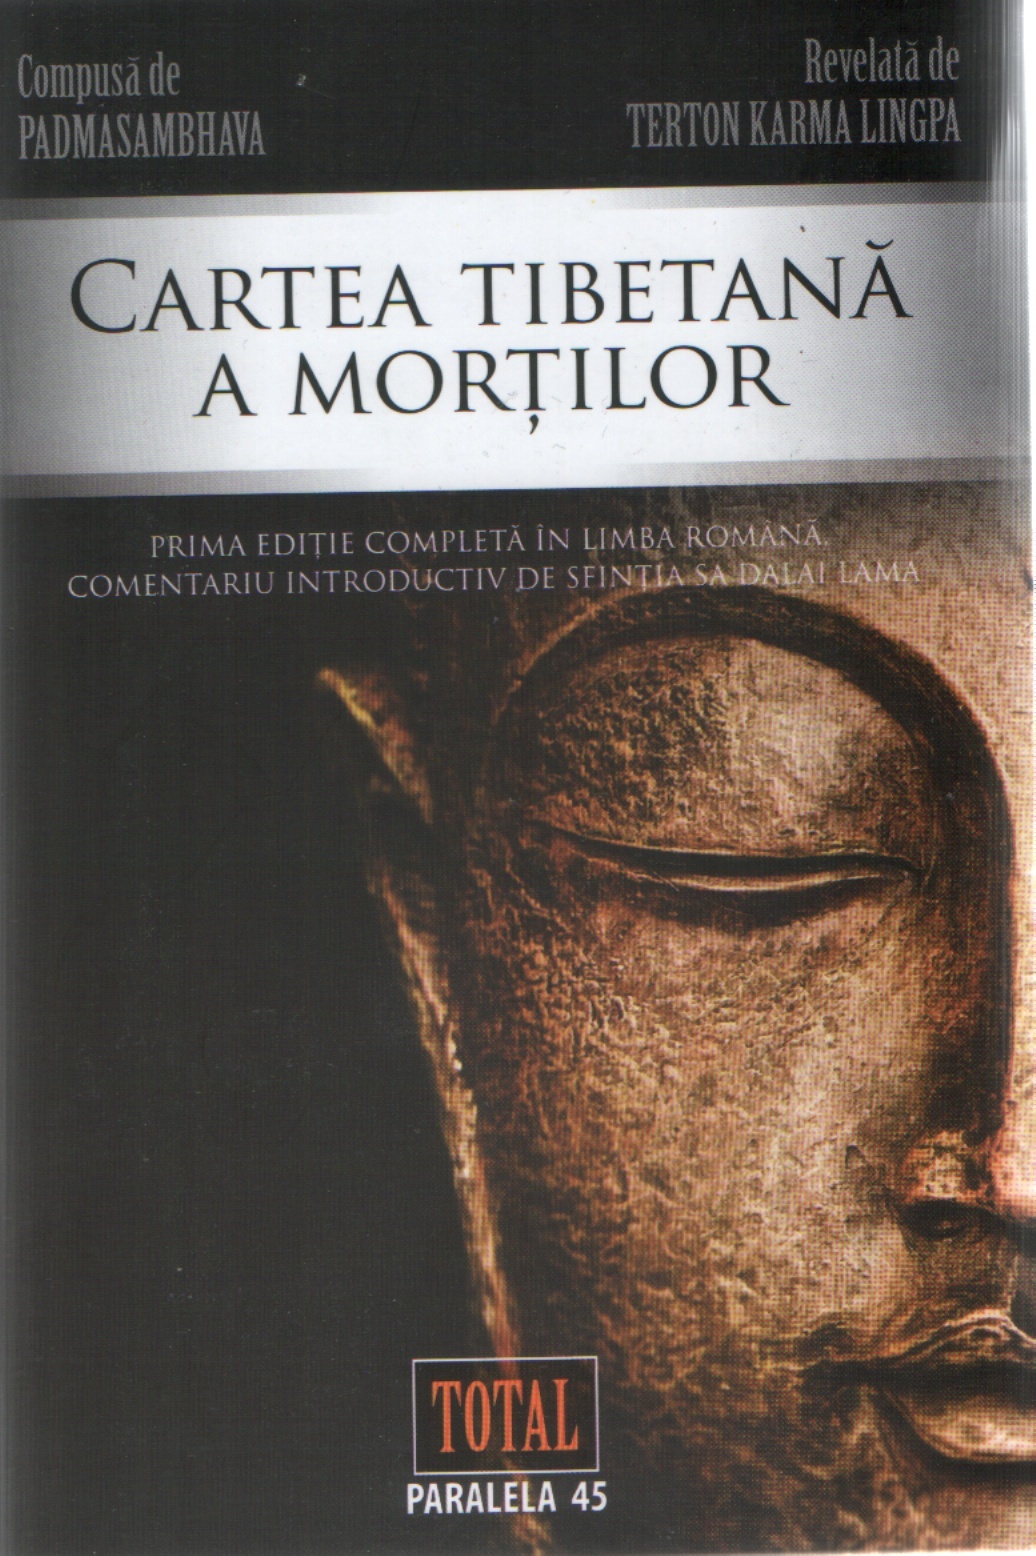 carte a tibetana a vietii si a mortii pdf download